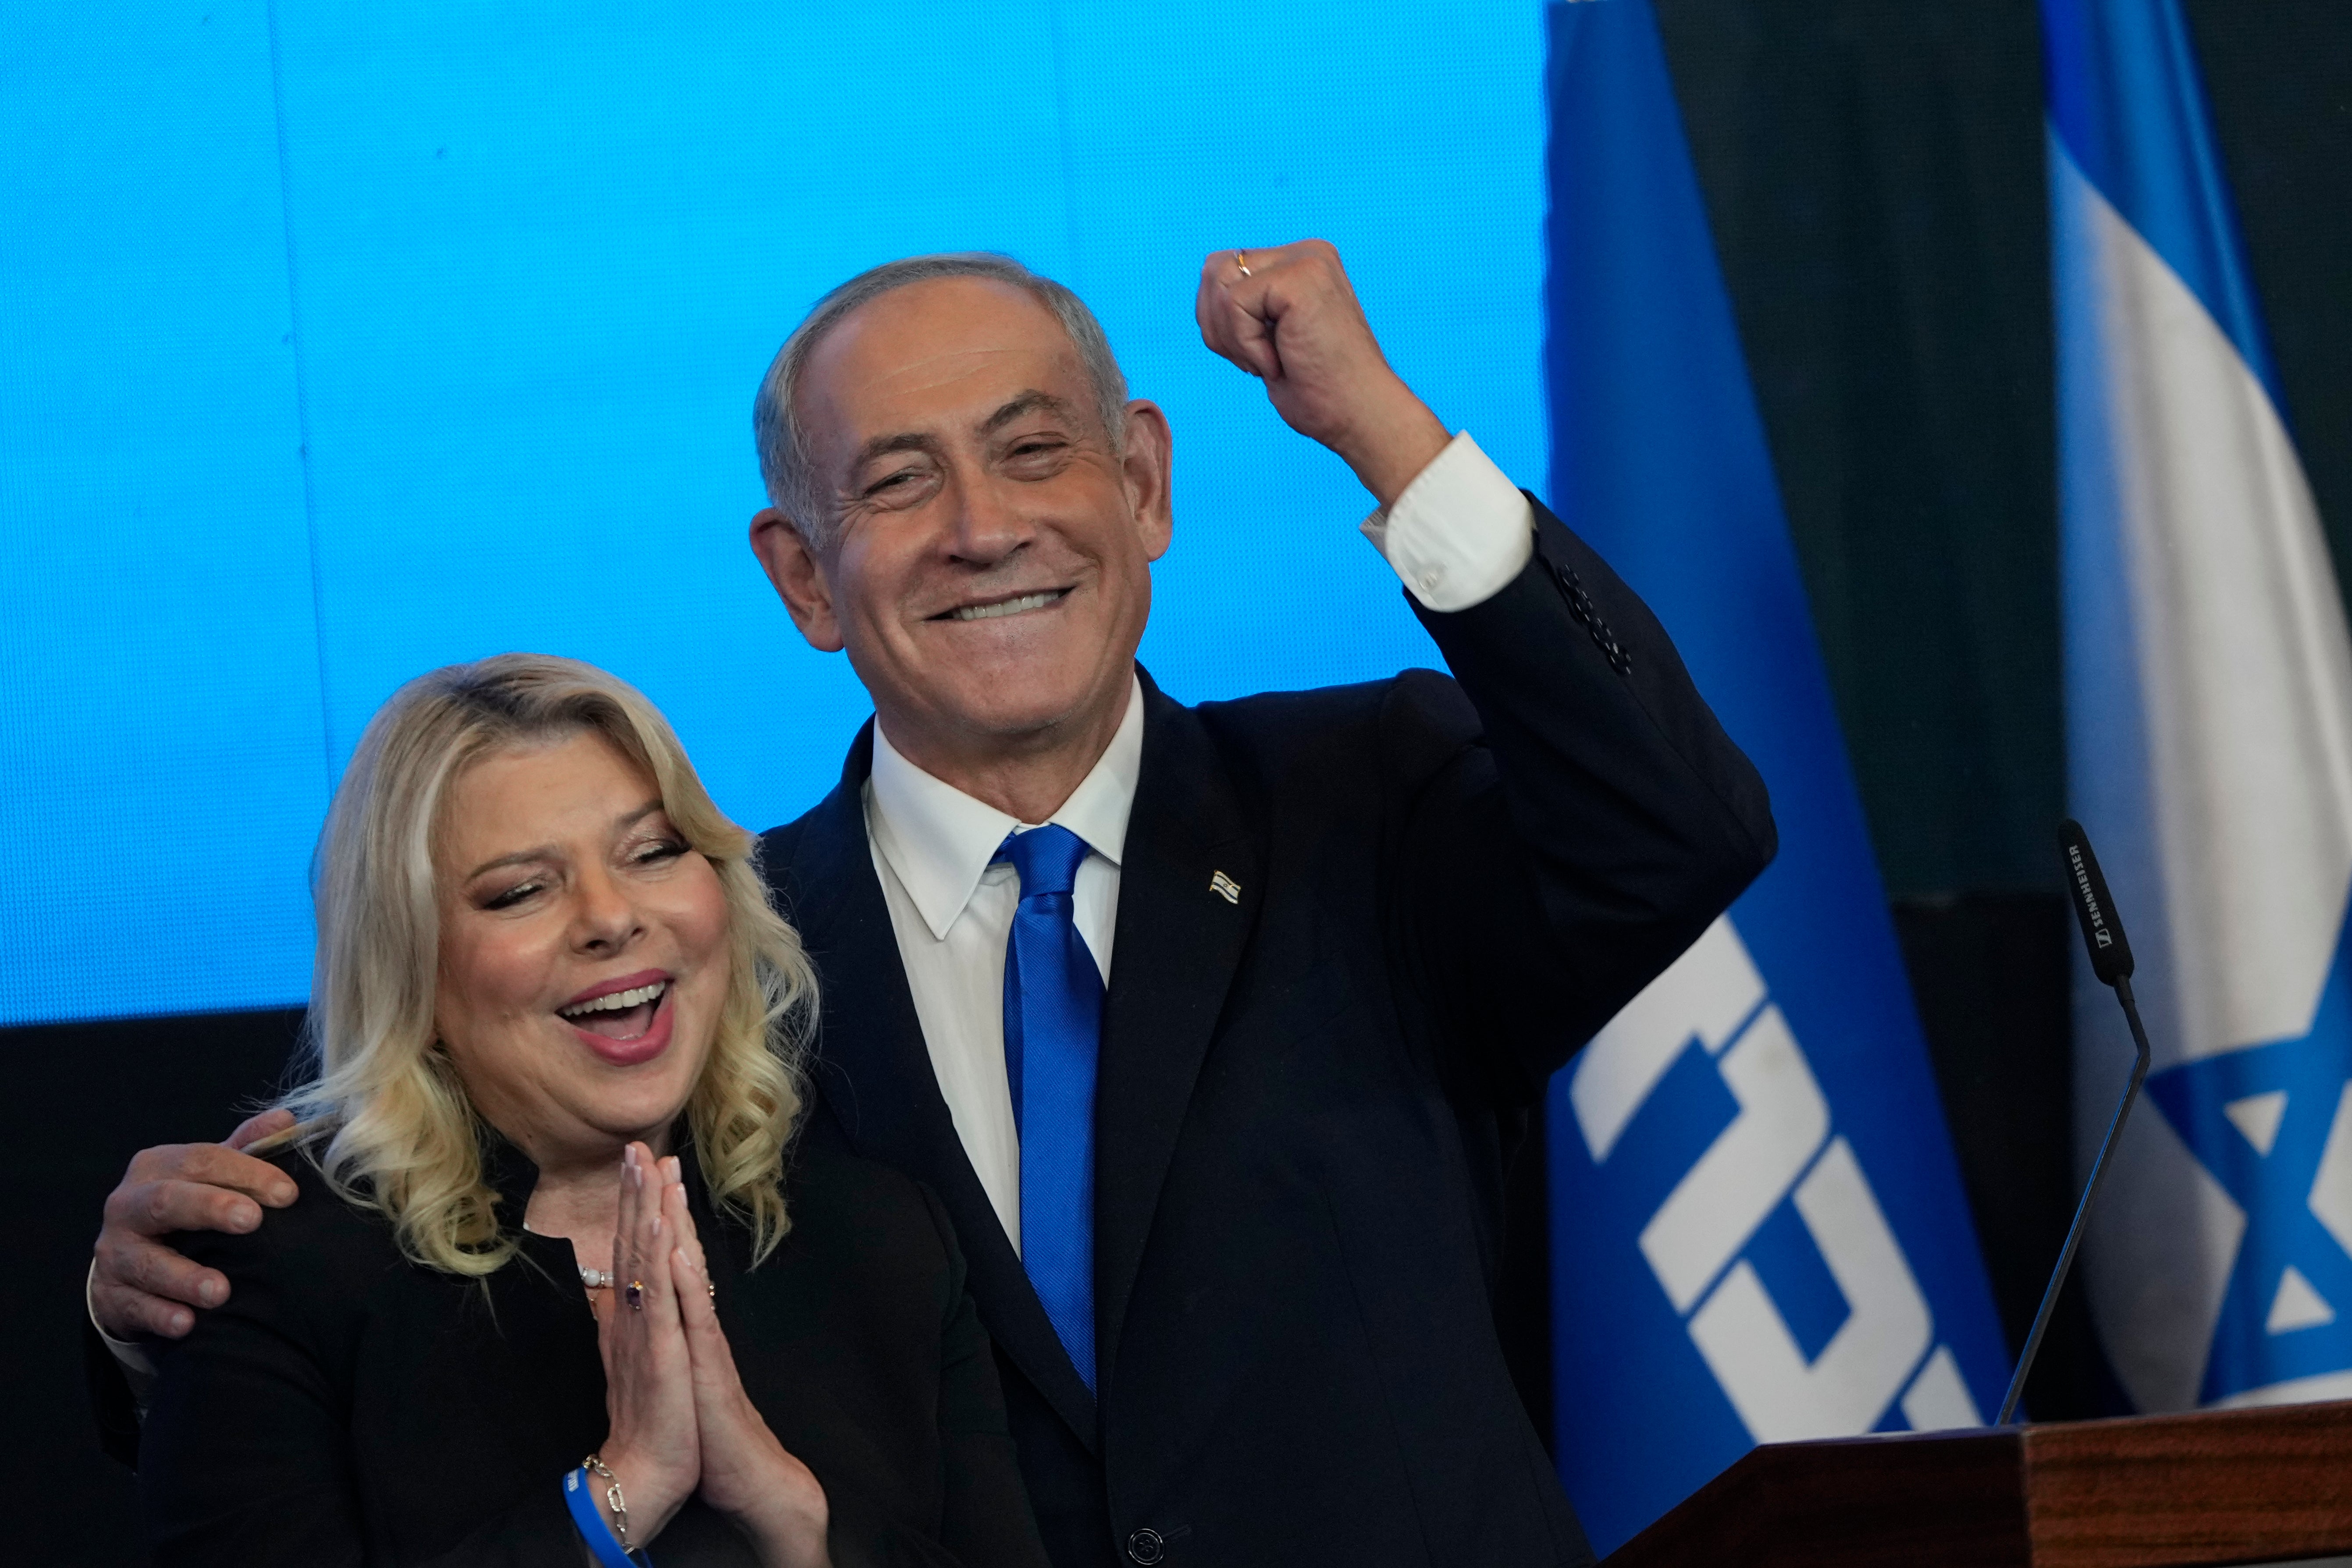 Benjamin Netanyahu and his wife Sara